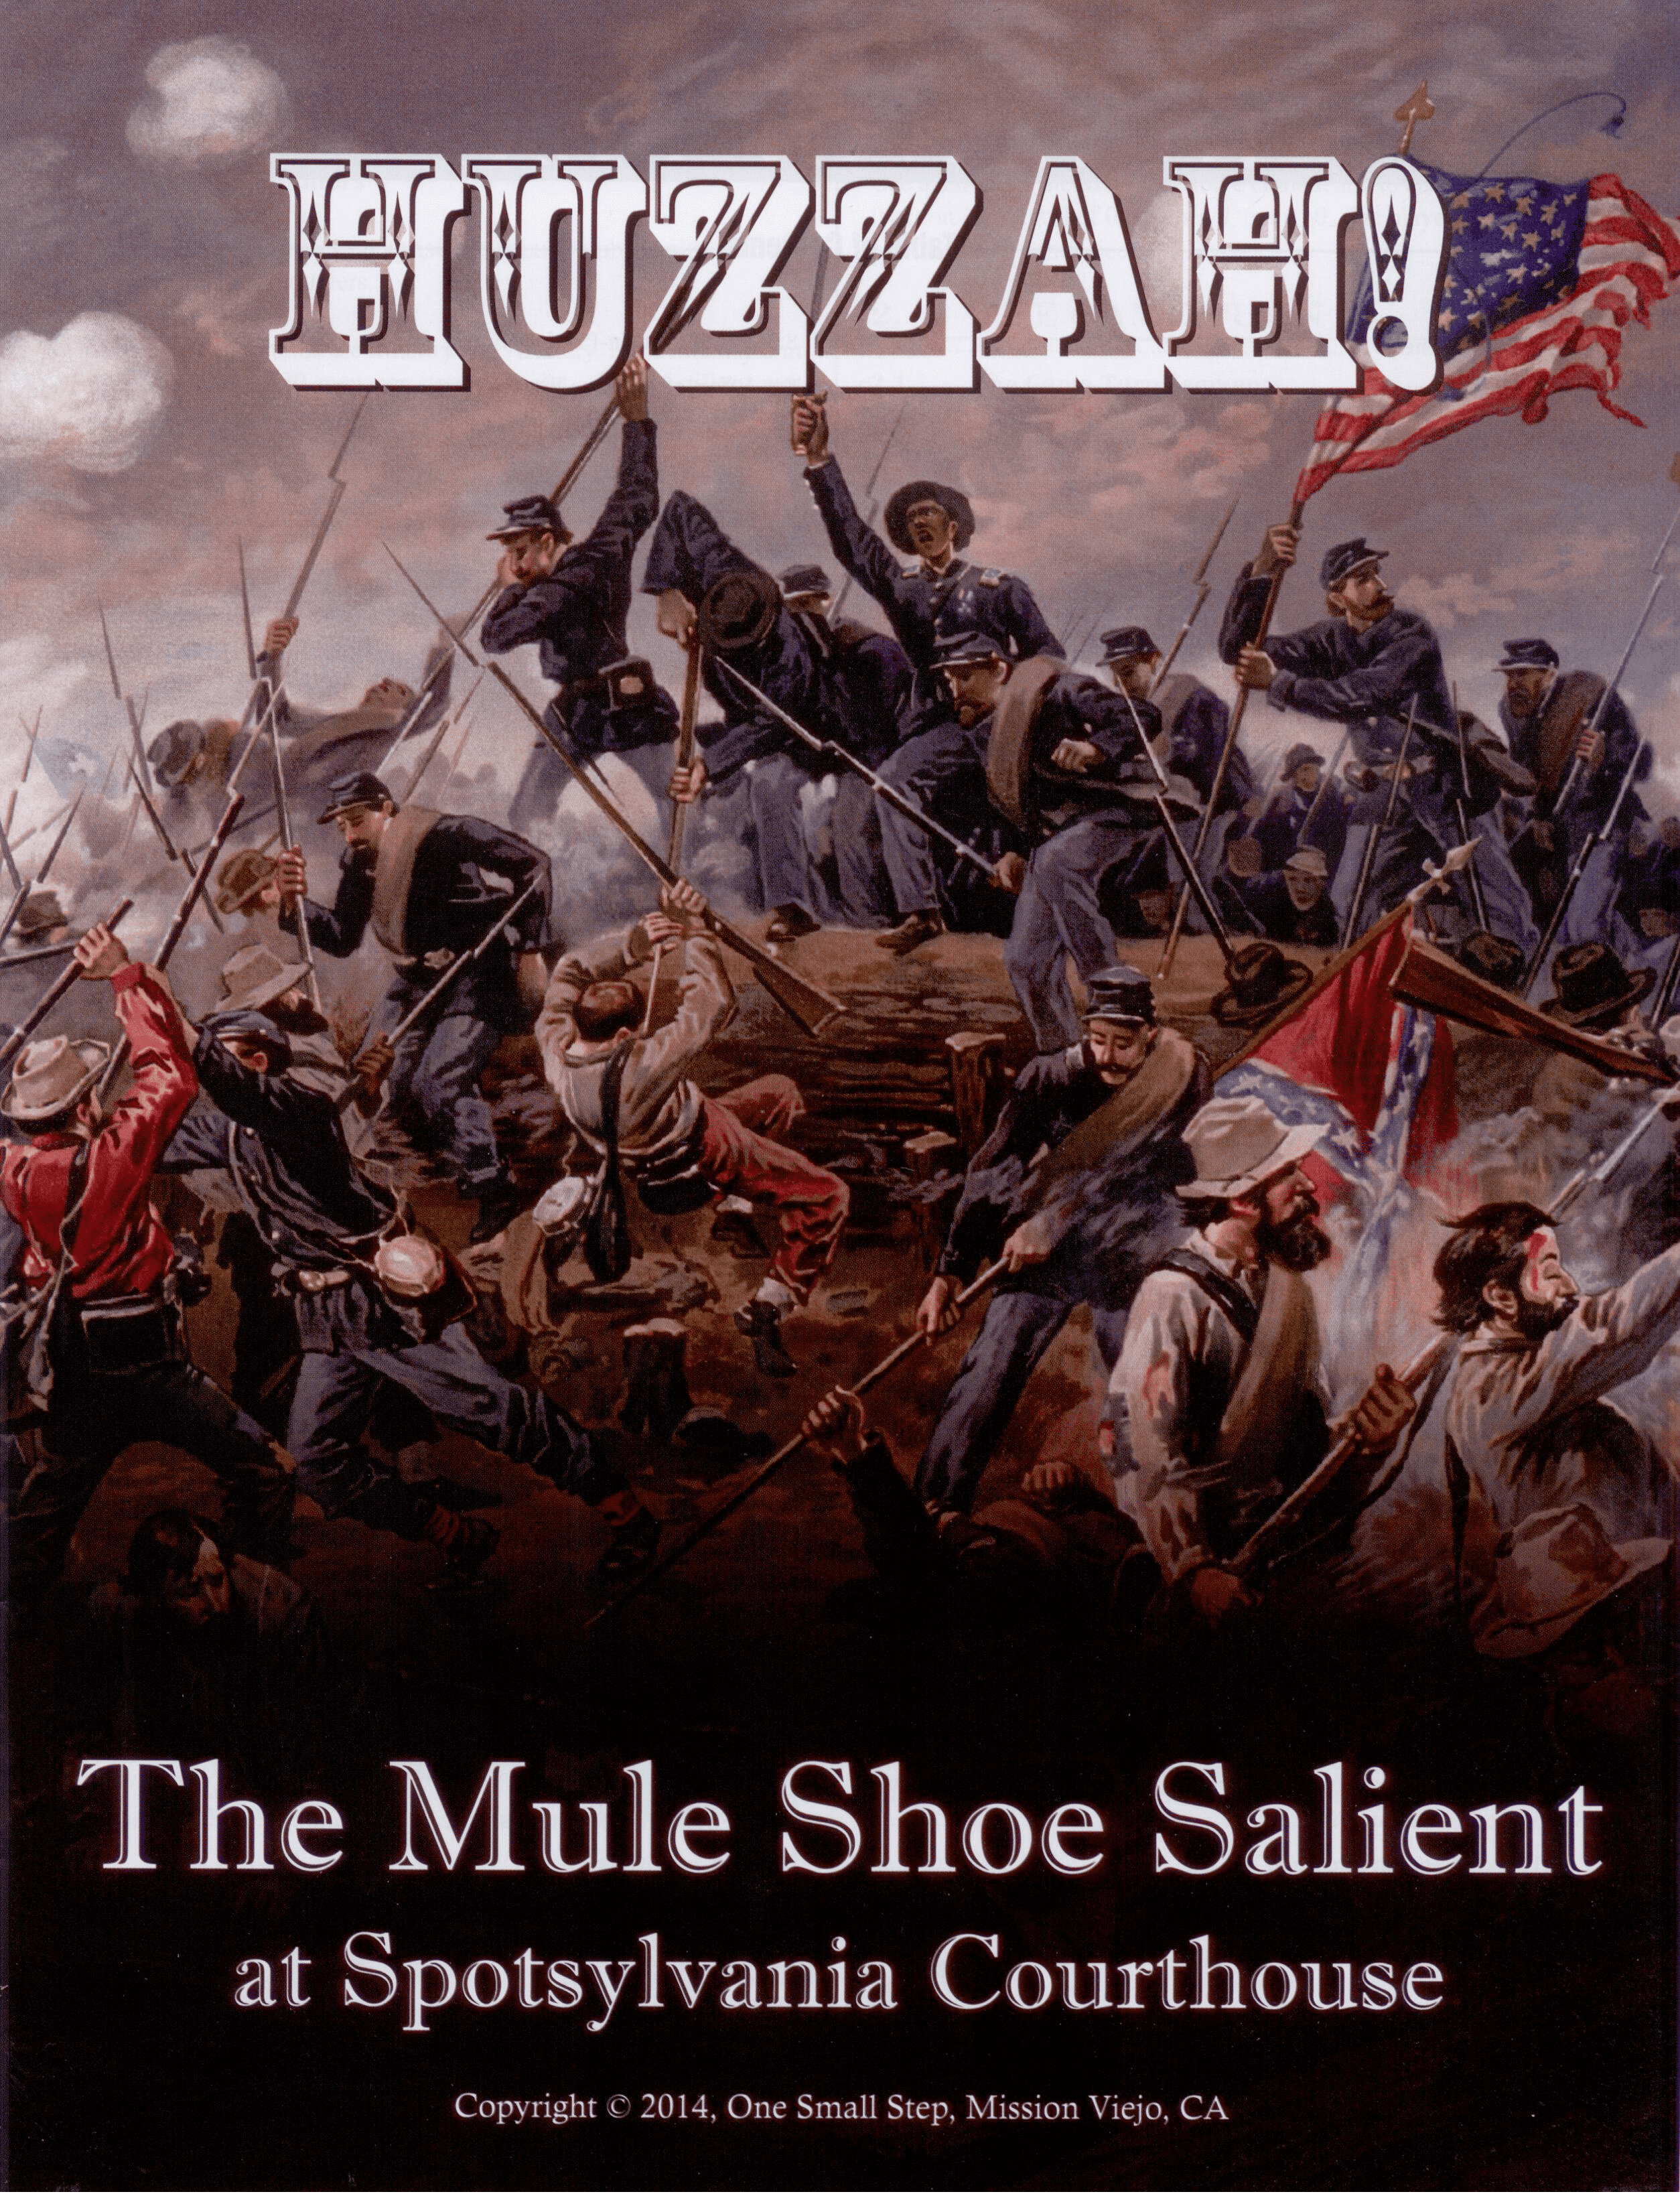 The Mule Shoe Salient